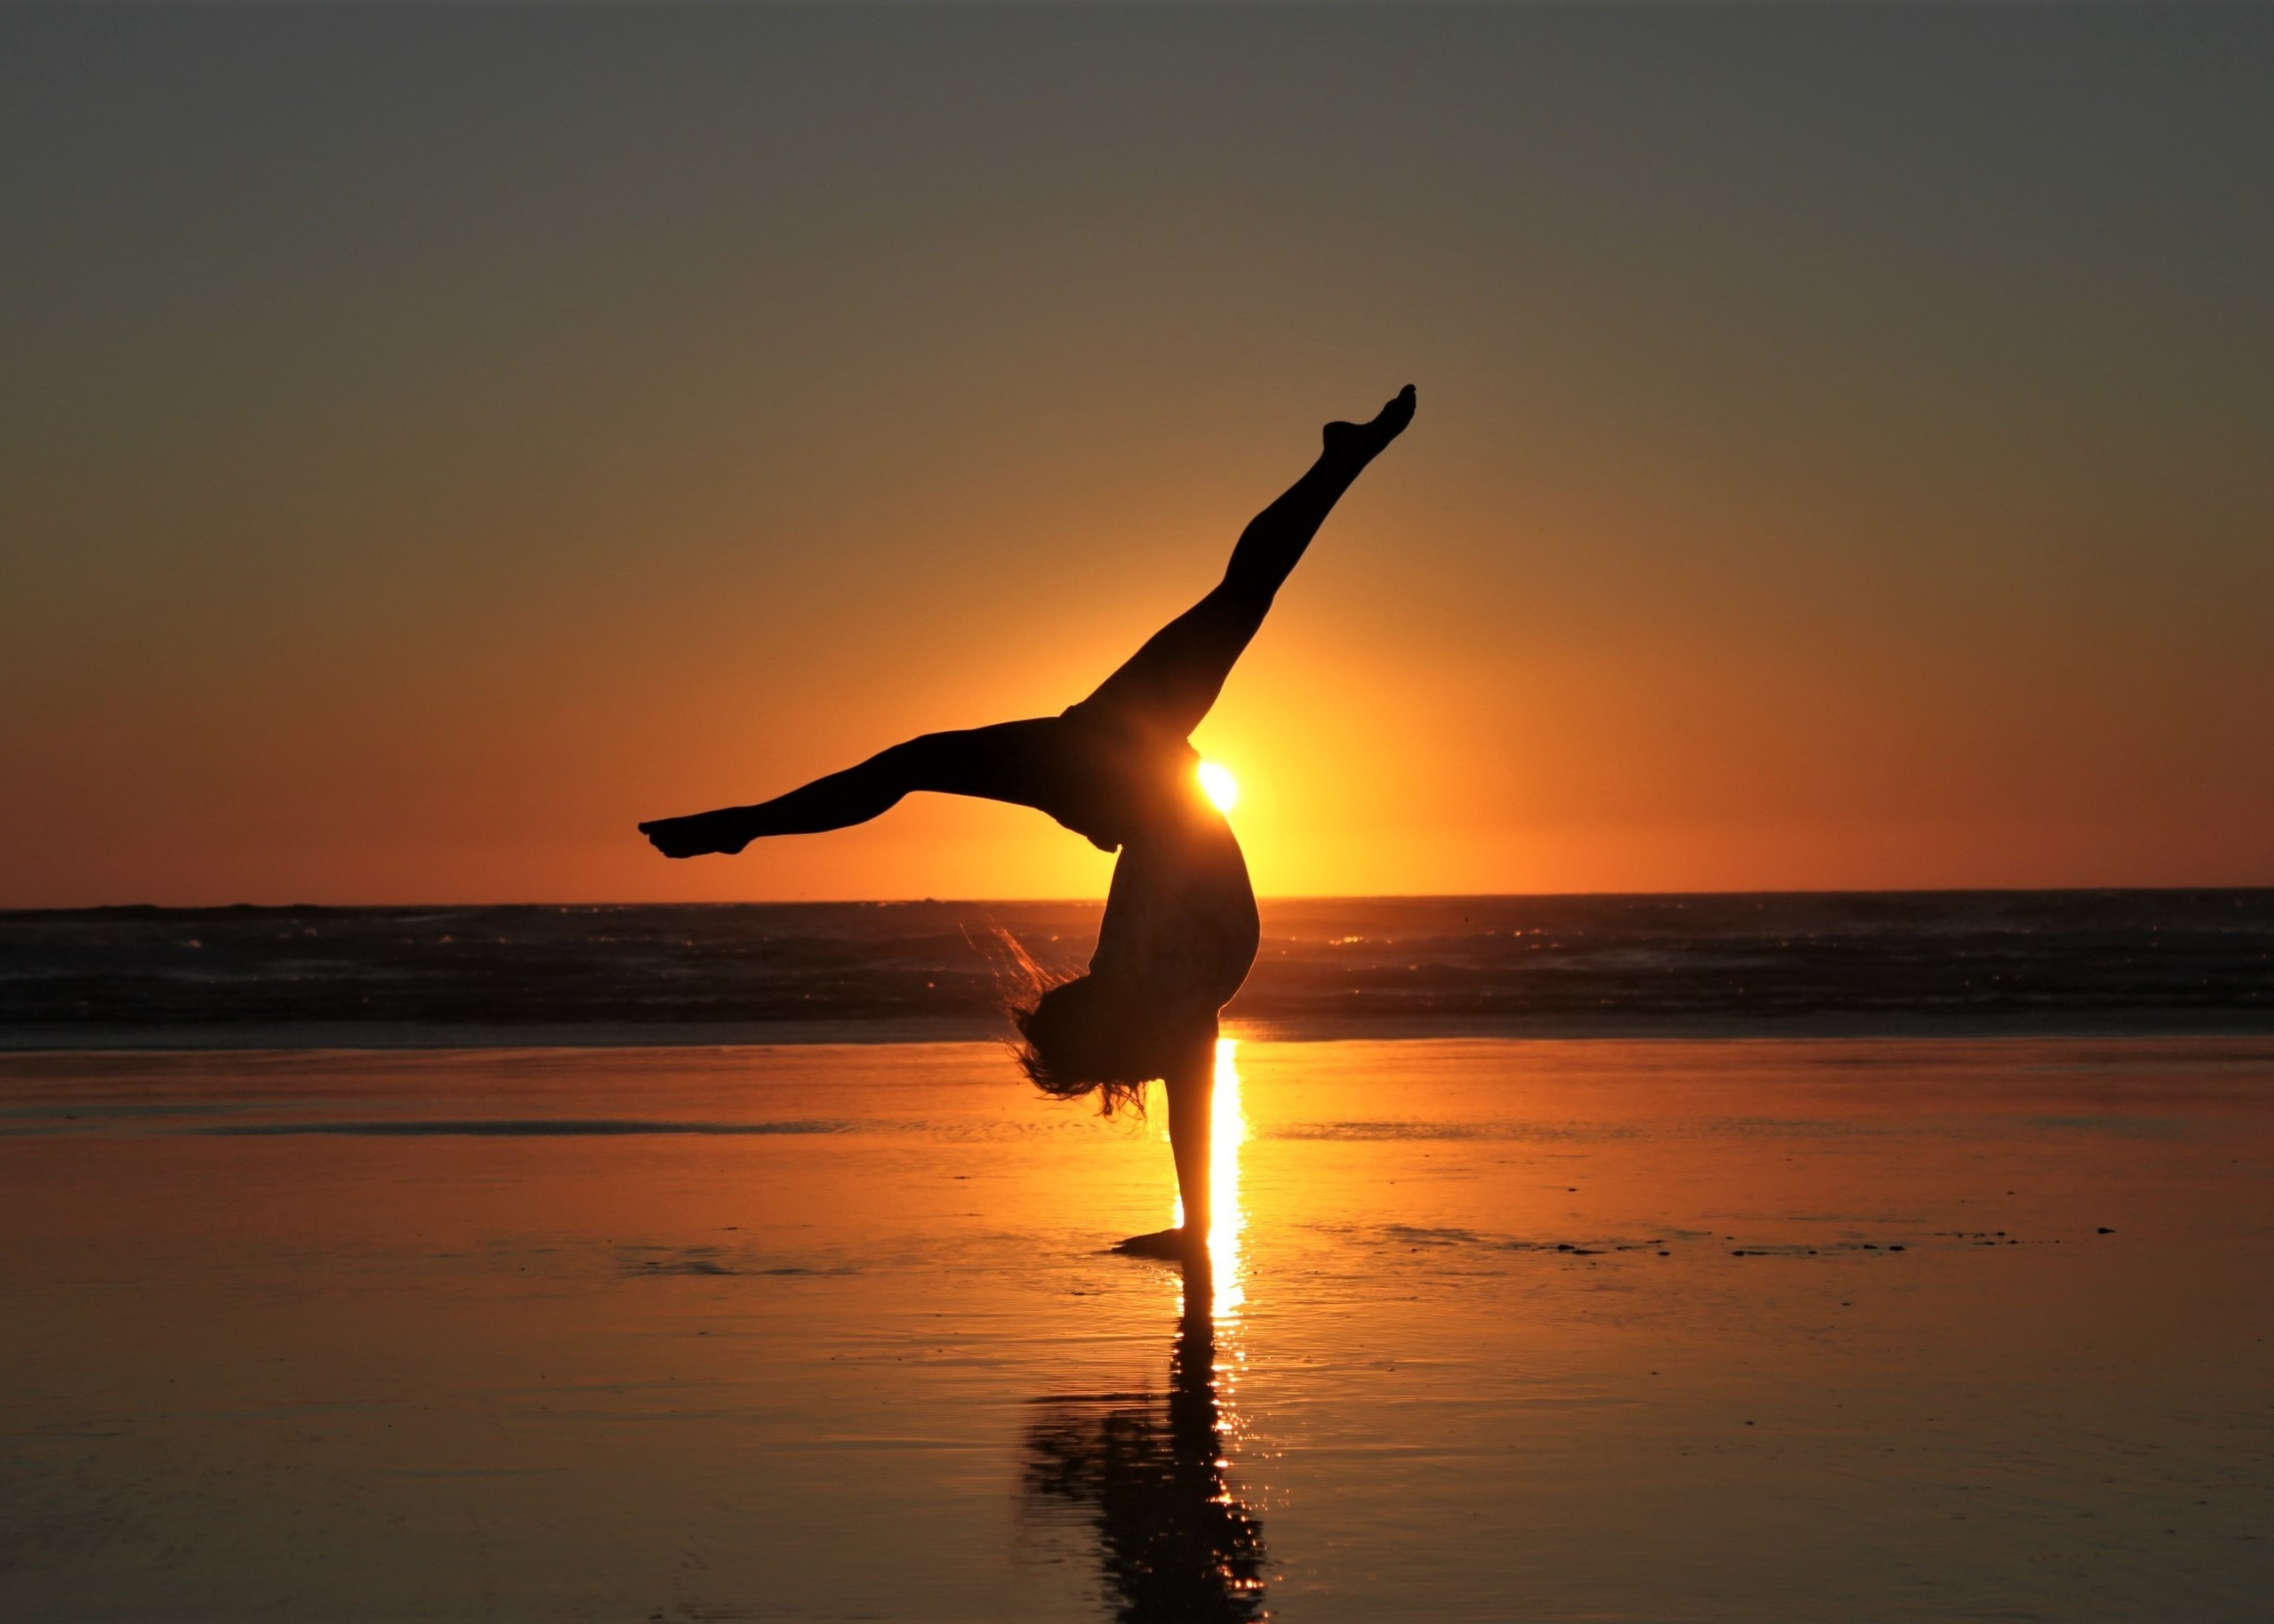 gymnastics on the beach sunset